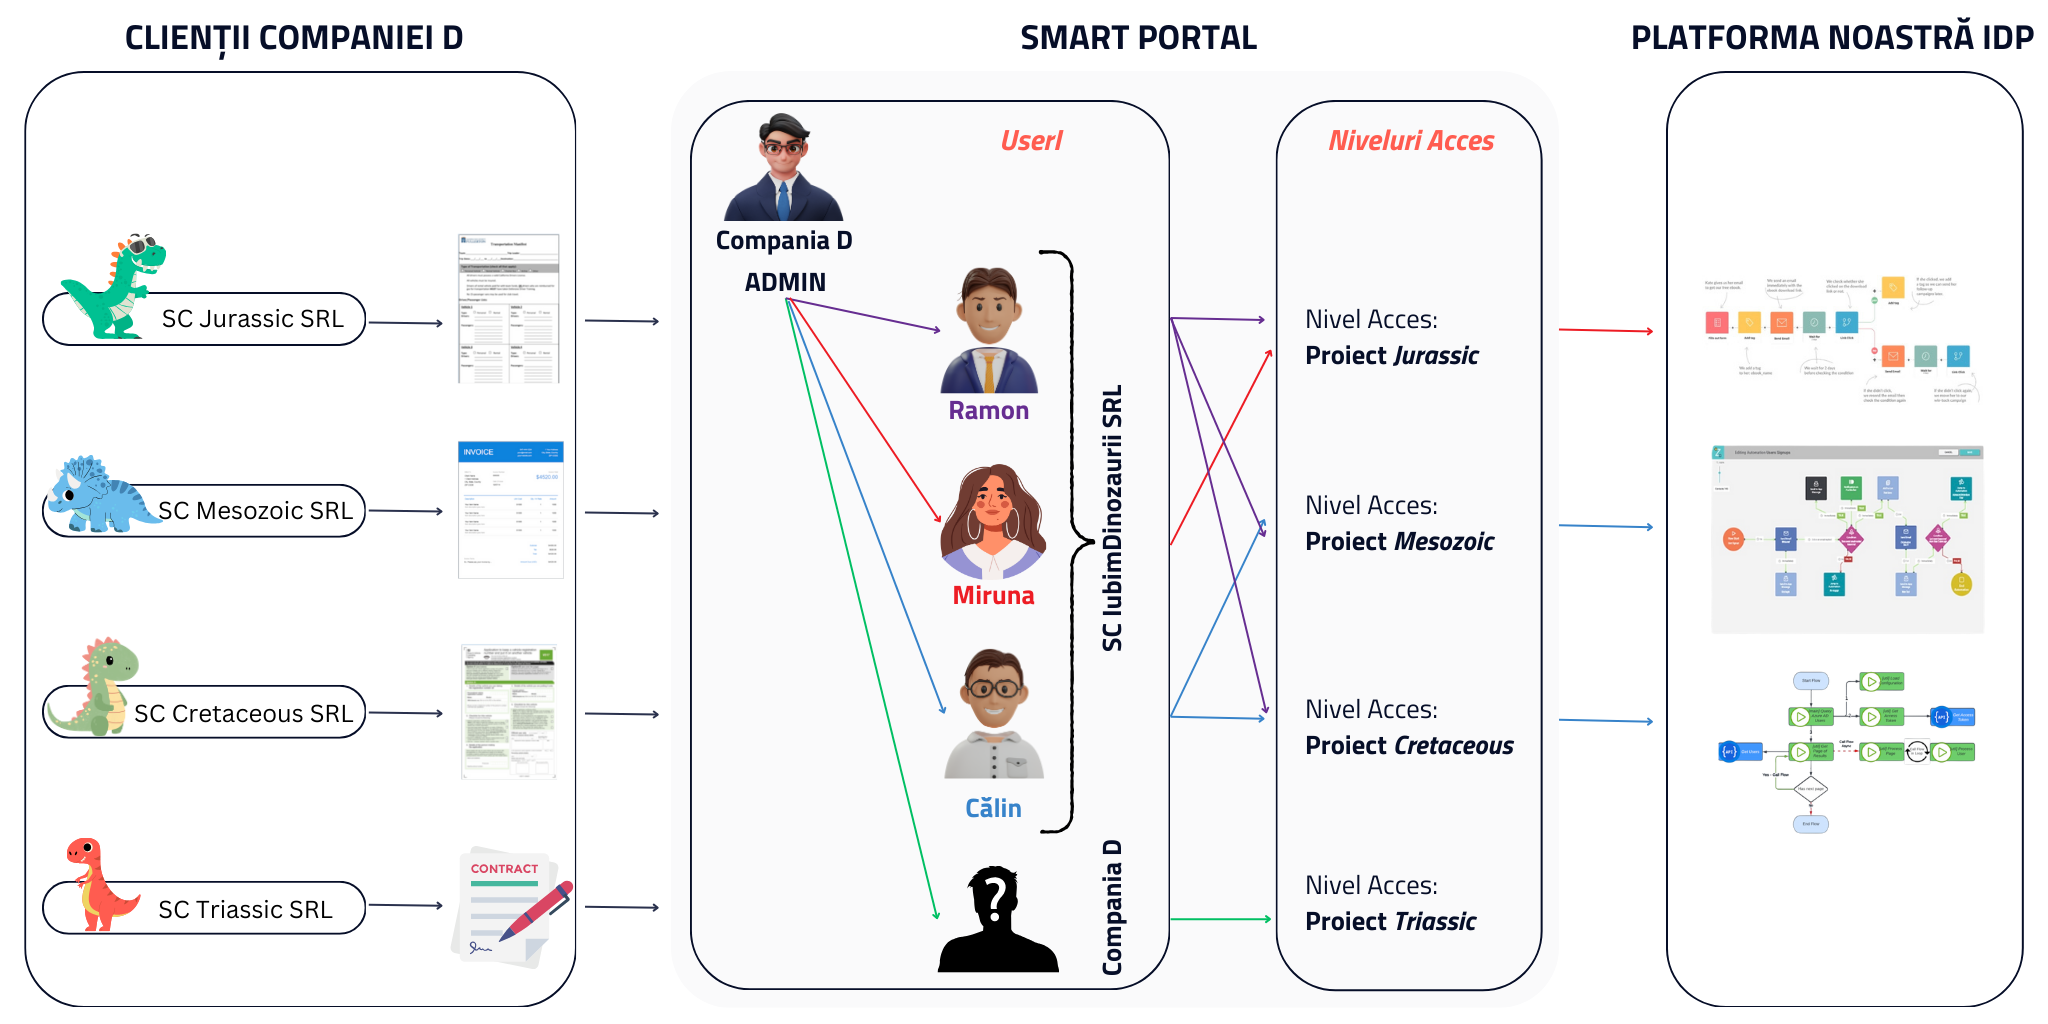 [ro] use case smart portal multirolesmultiusers